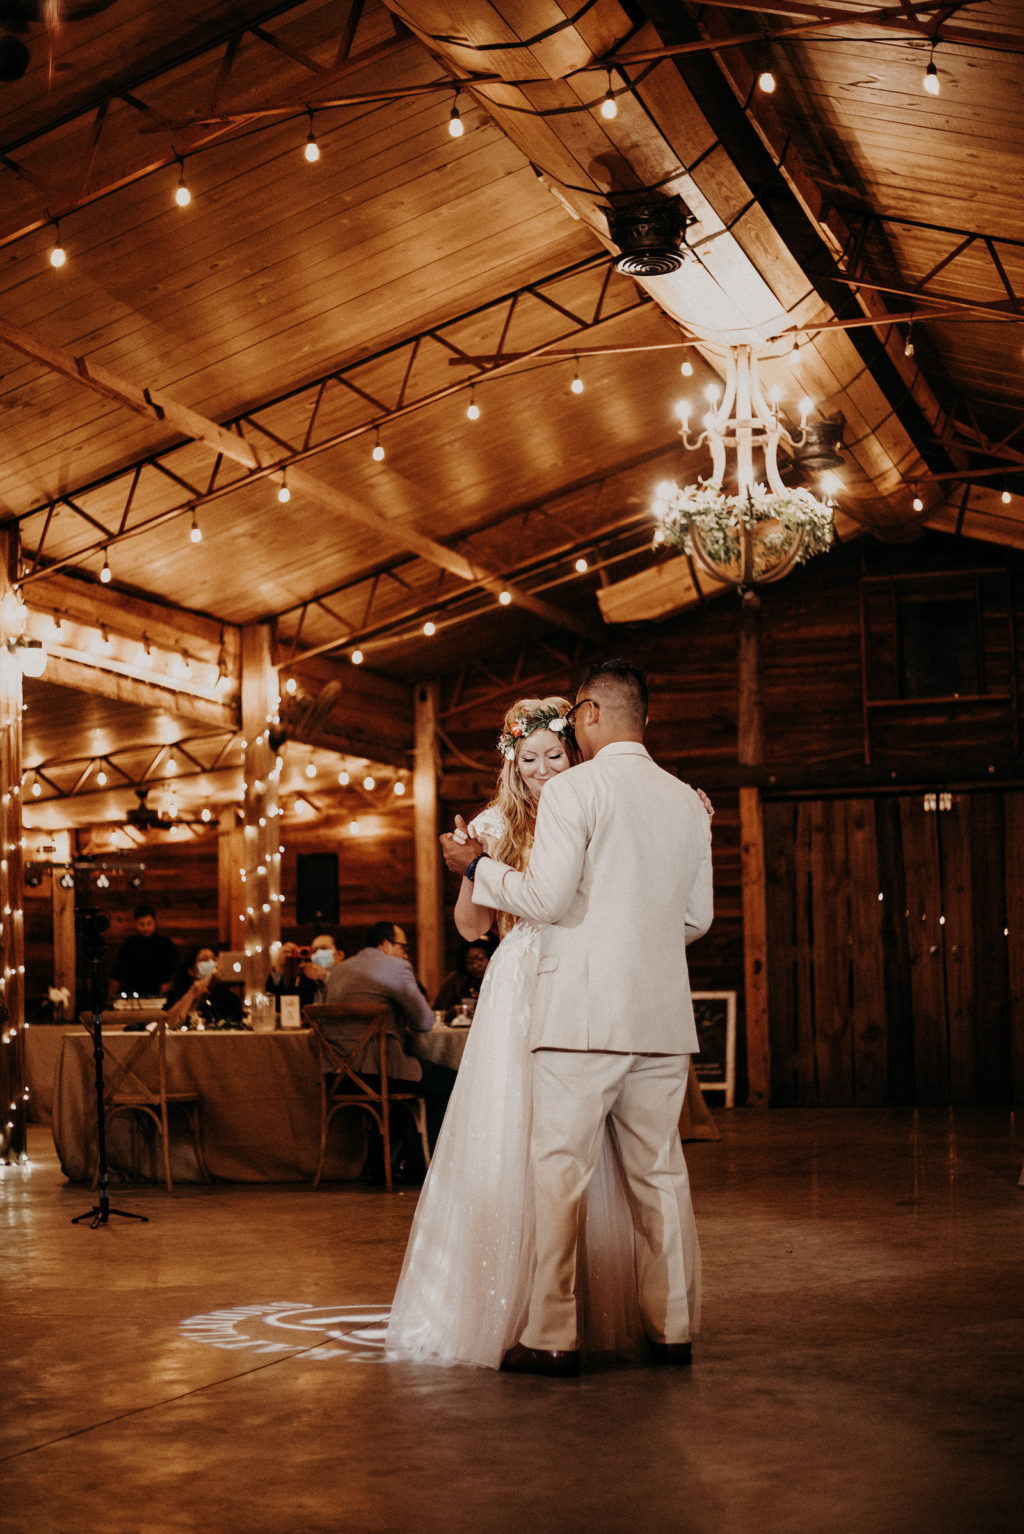 Rustic Bride and Groom First Dance Wedding Reception | Plant City Wedding Venue Florida Rustic Barn Weddings